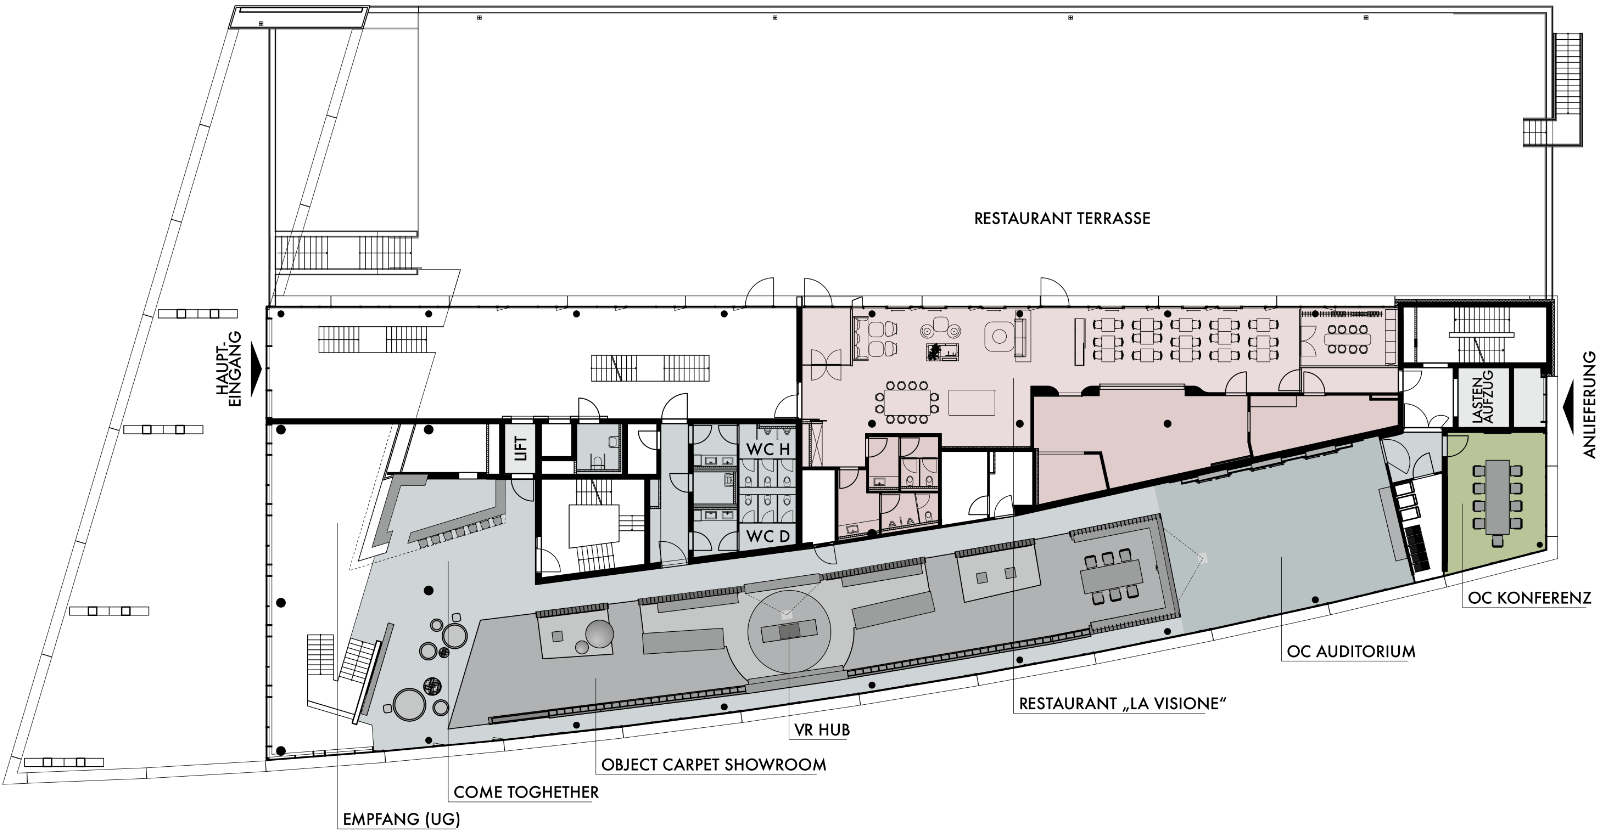 Room layout ground floor